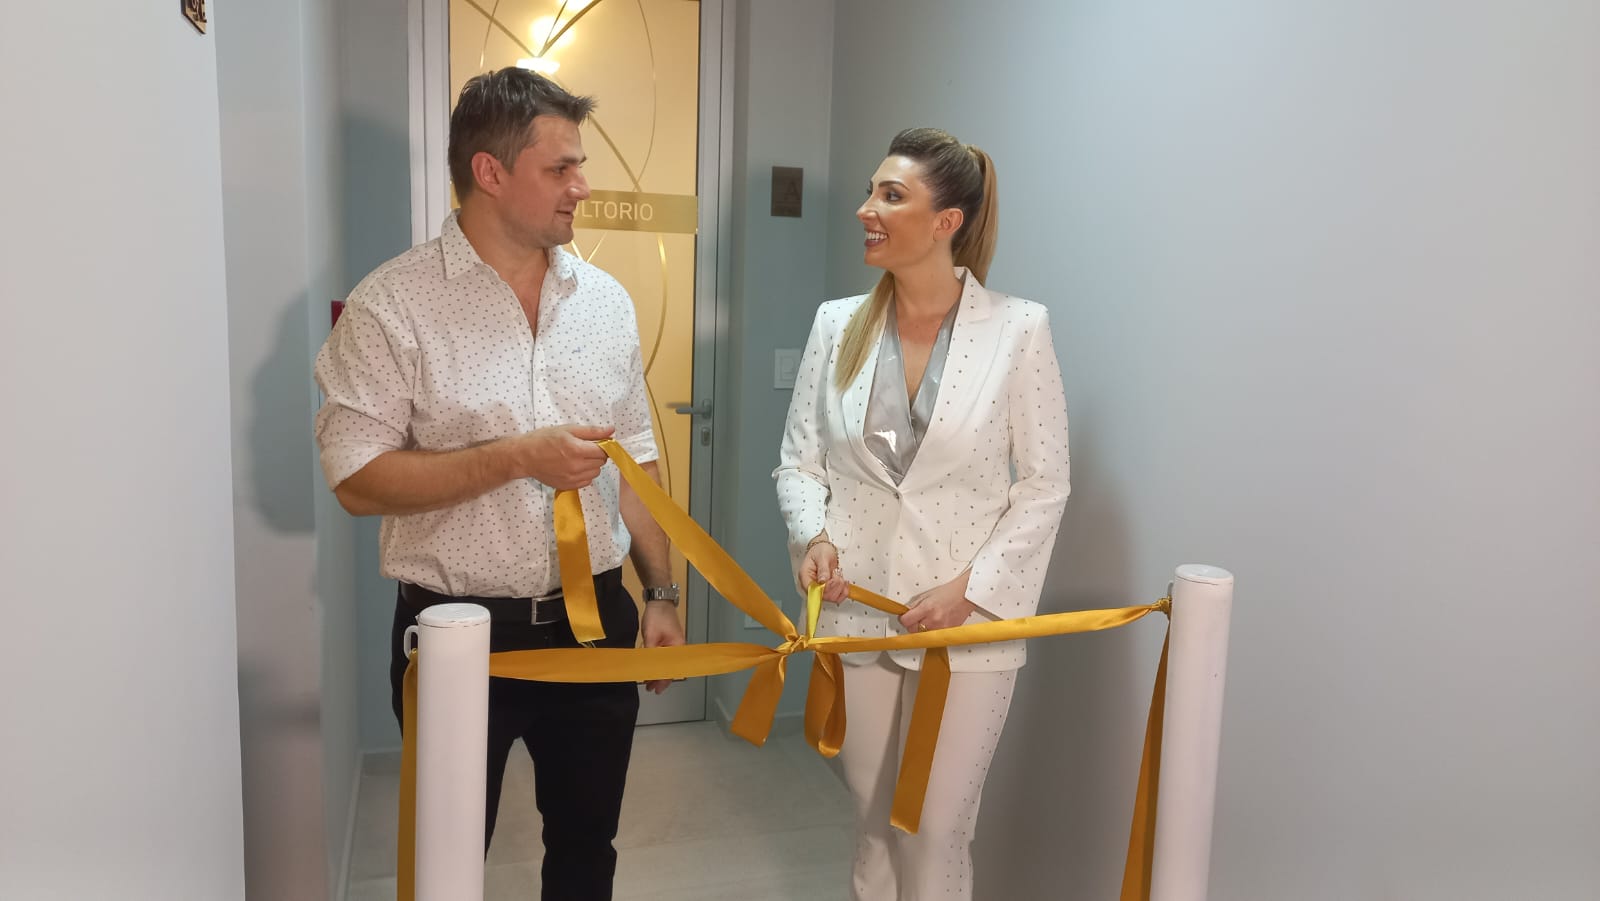 Dr. Florencia Sartori Inaugurates Her Aesthetic Medicine Center In Posadas City